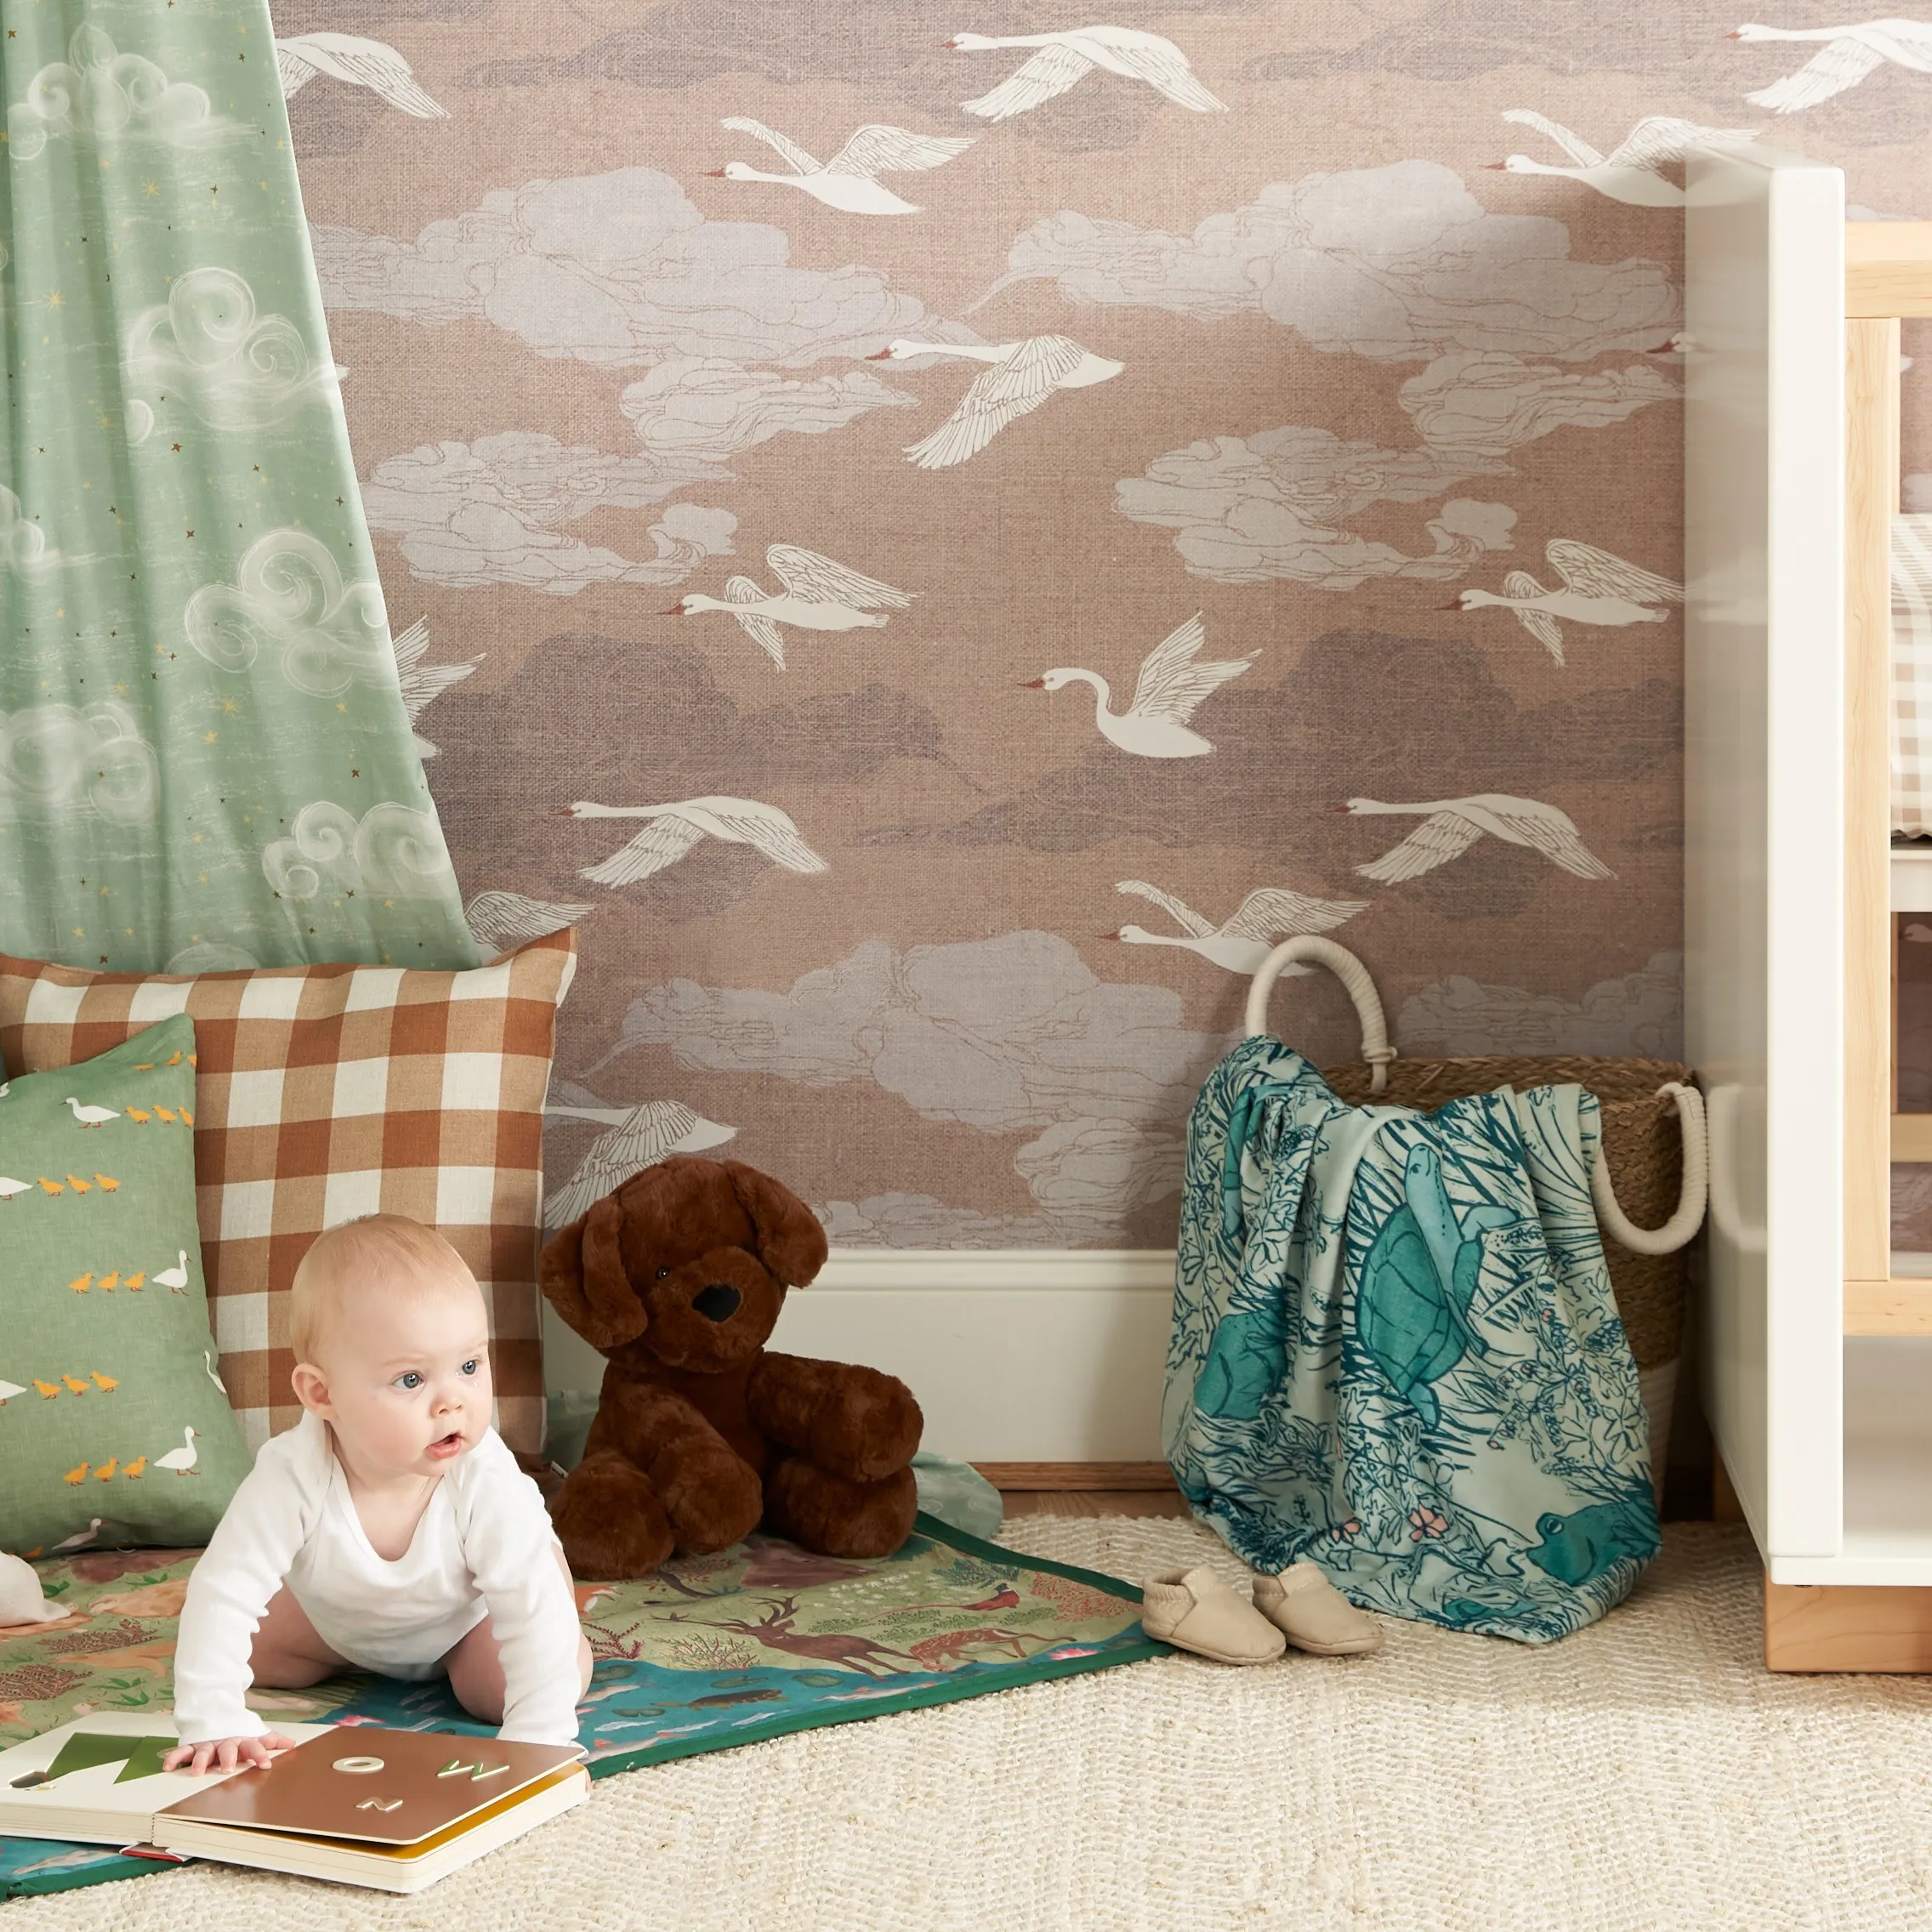 Baby in nursery with swan print wallpaper.